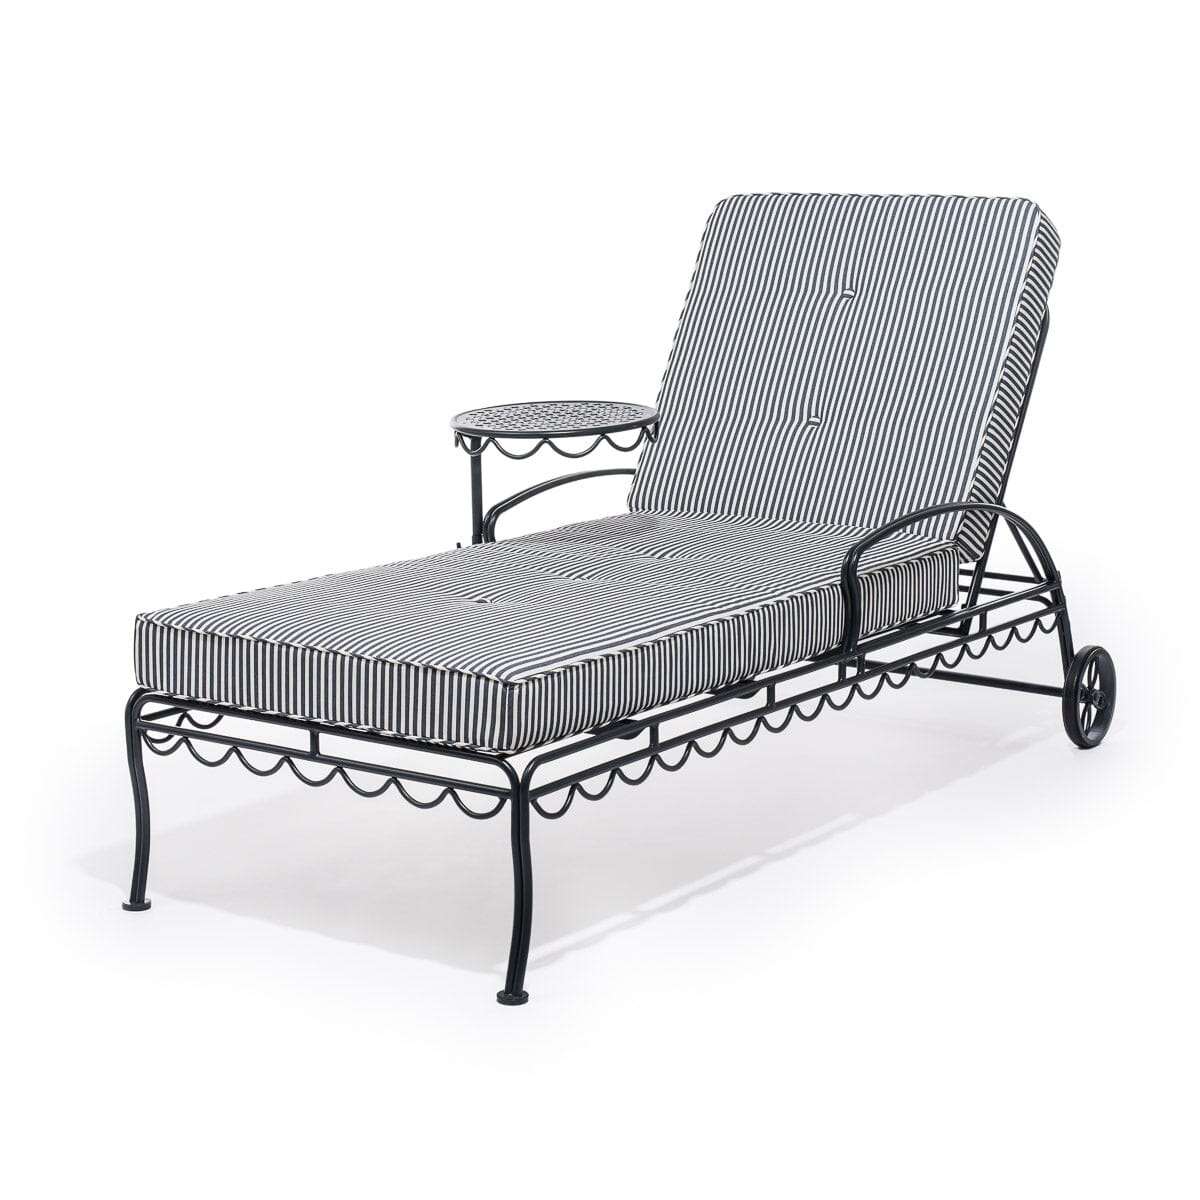 The Al Fresco Sun Lounger Cushion - Lauren's Navy Stripe Al Fresco Sun Lounger Cushions Business & Pleasure Co 